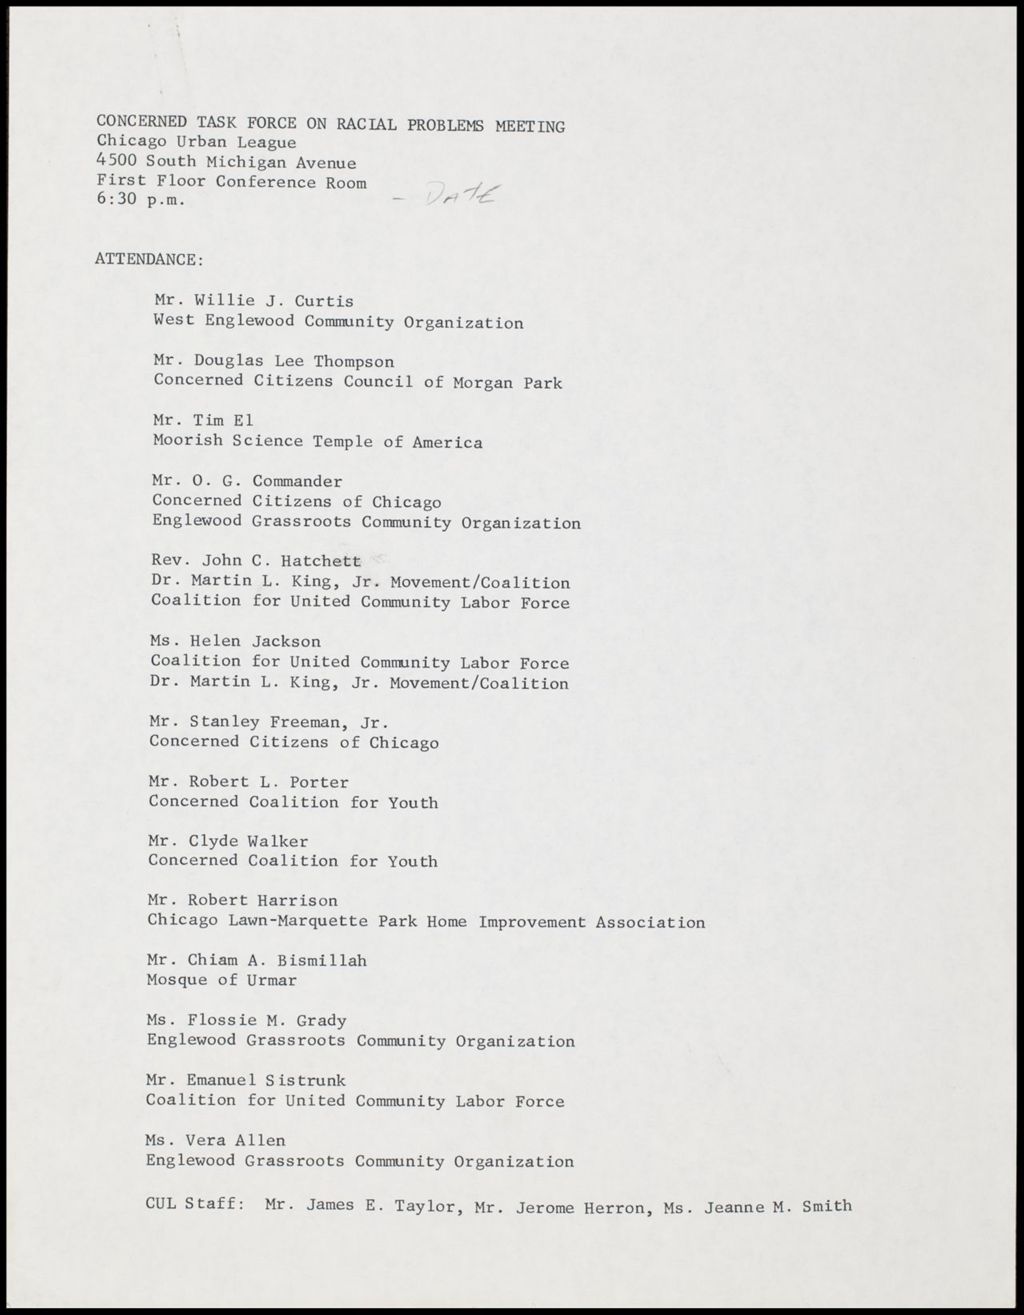 Task Force on Racial Problems, 1976 (Folder II-2262)